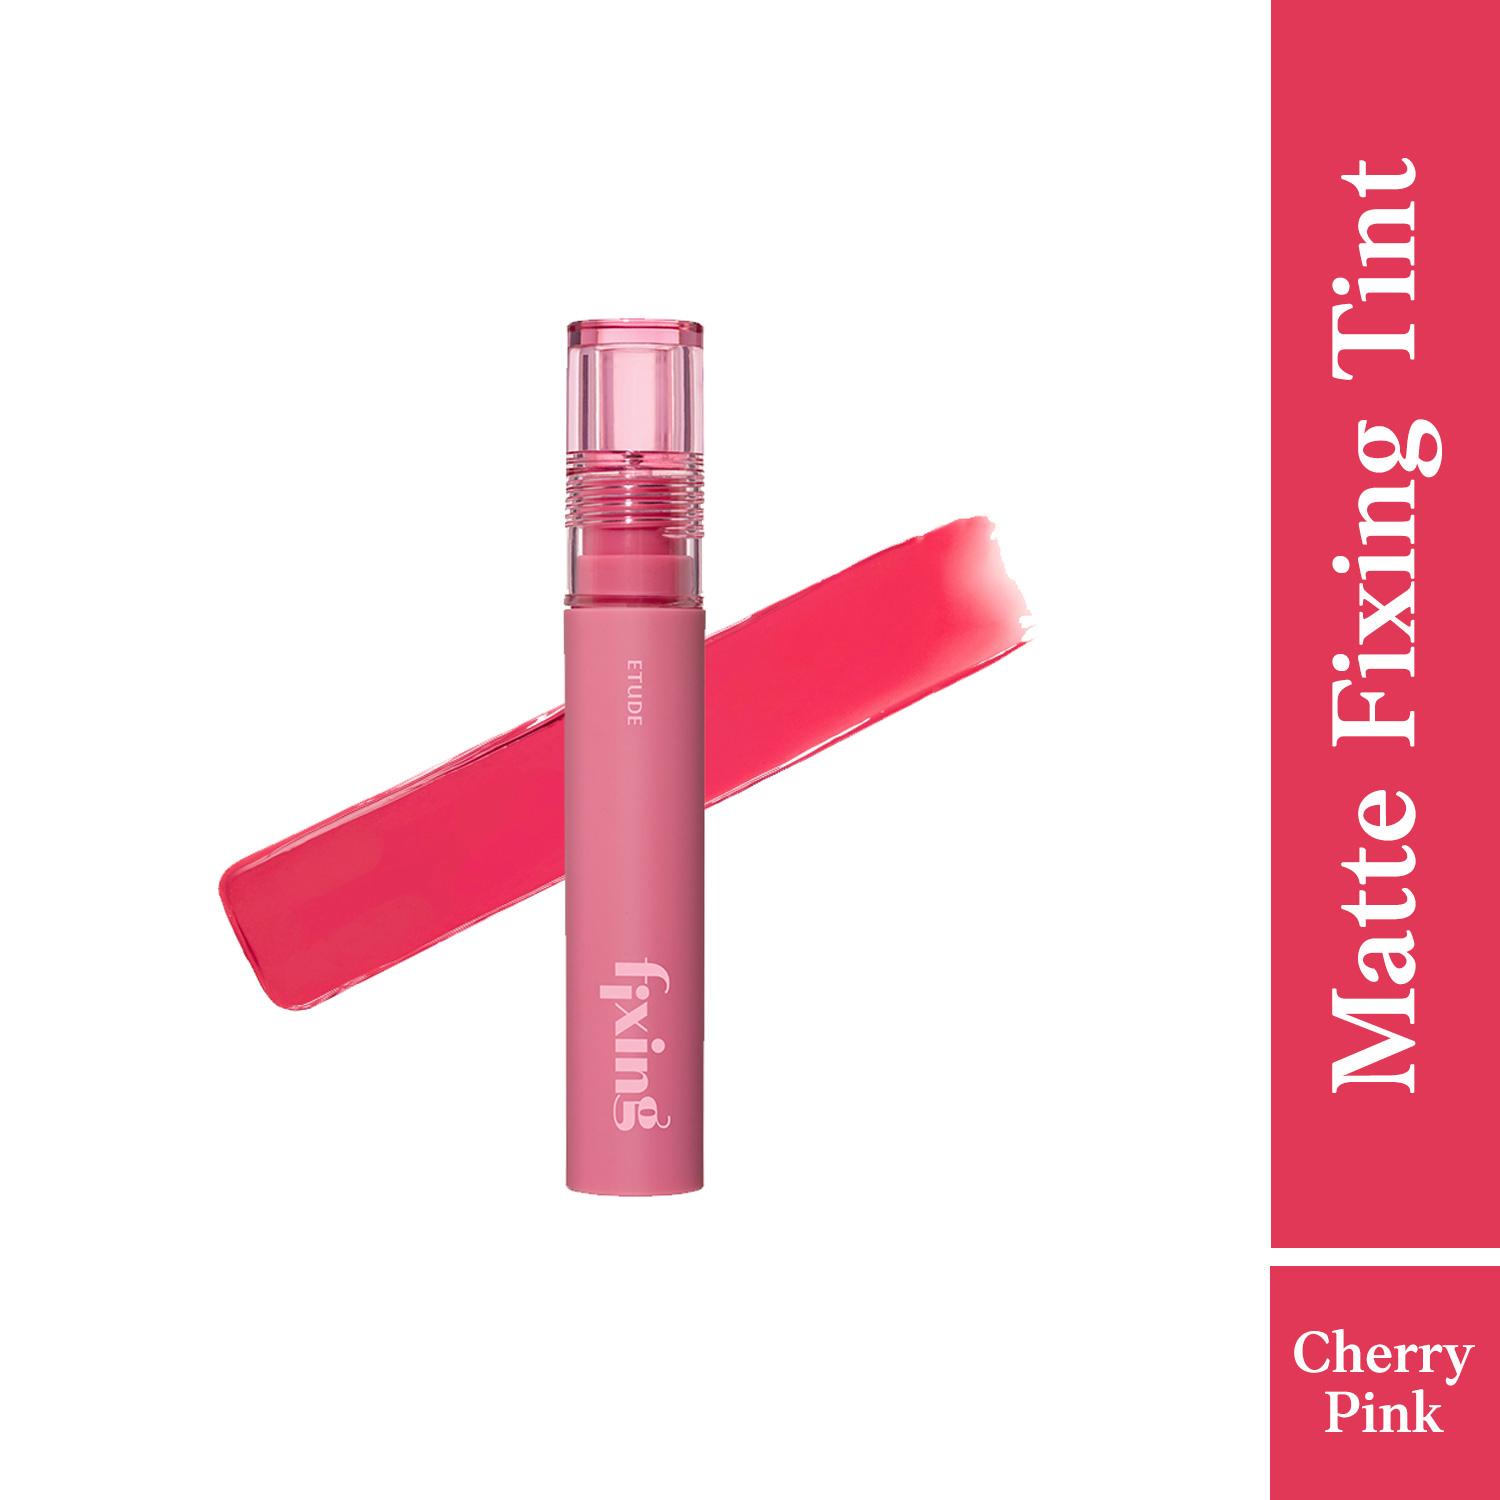 ETUDE HOUSE | ETUDE HOUSE Fixing Tint Lipstick #10 - Smoky Cherry (4 g)